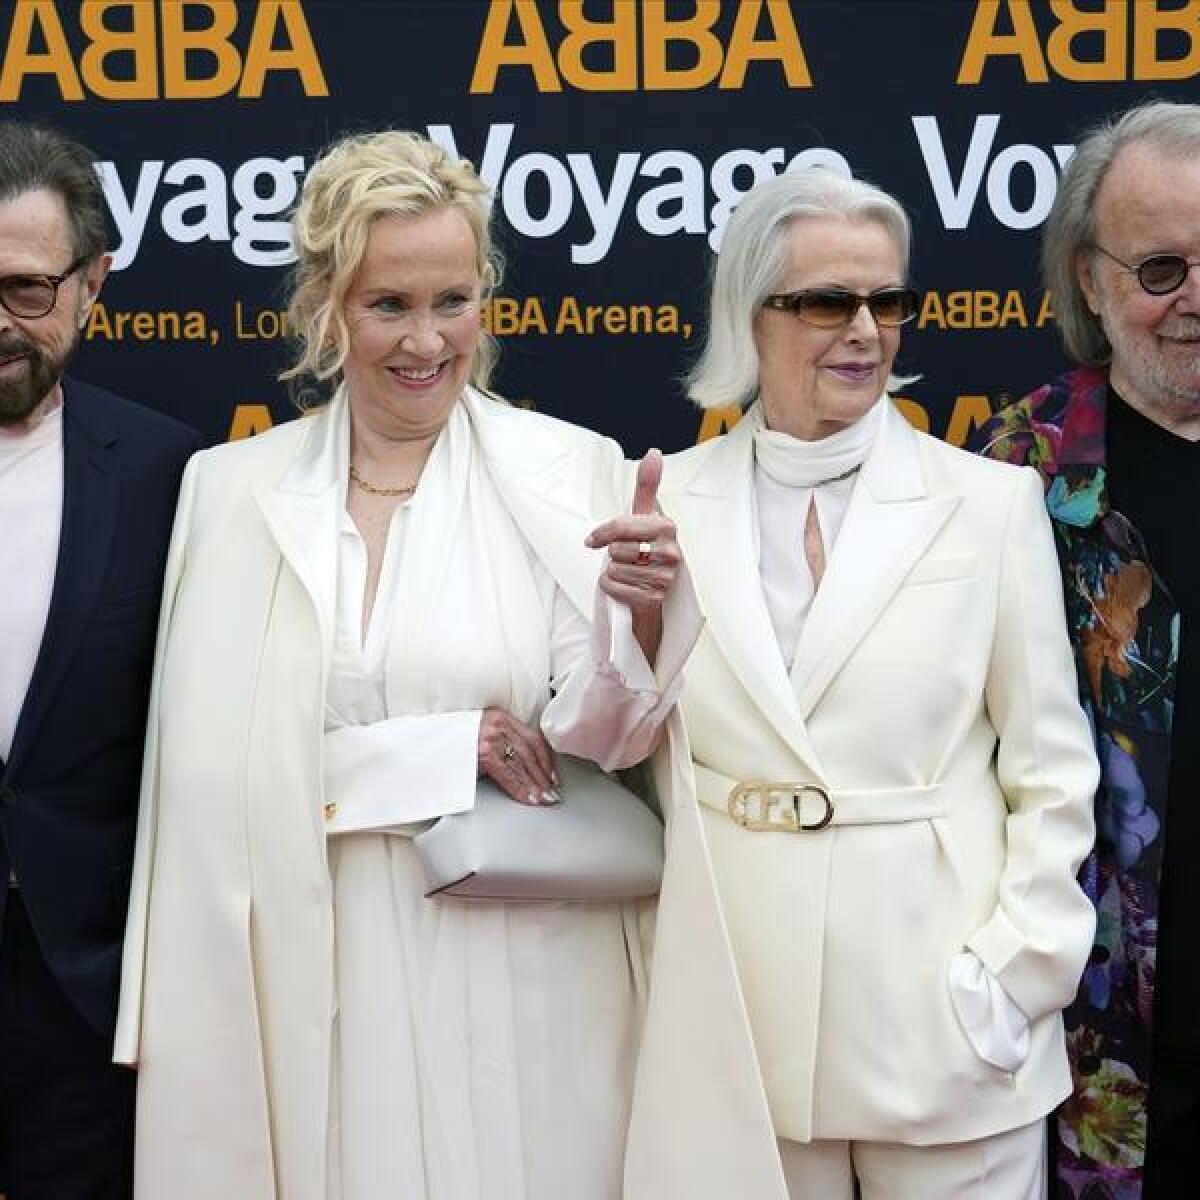 Bjorn Ulvaeus, Agnetha Faltskog, Anni-Frid Lyngstad and Benny of ABBA